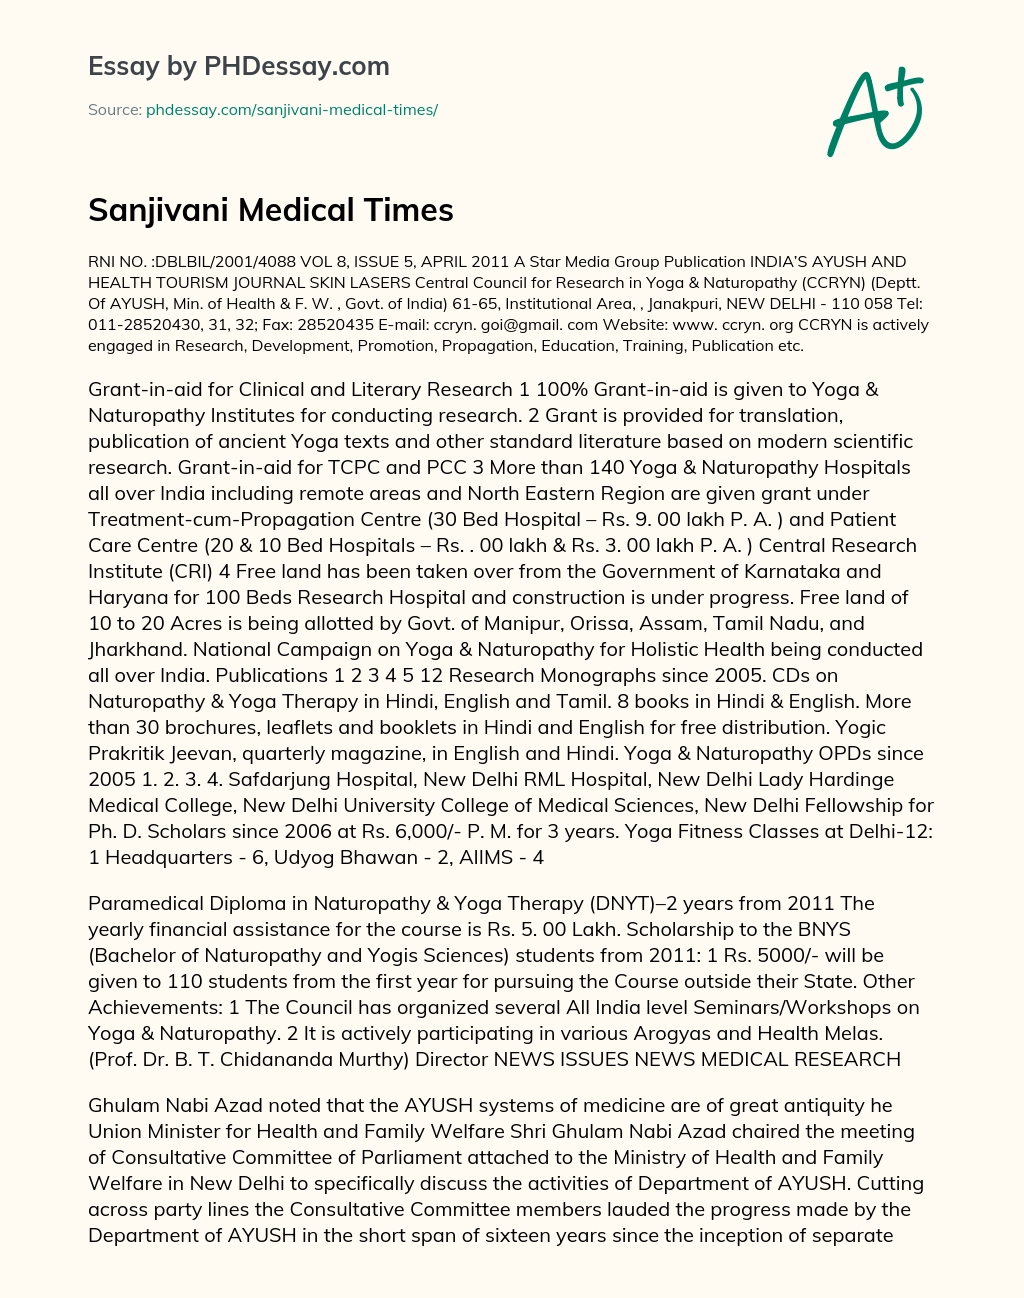 Sanjivani Medical Times essay